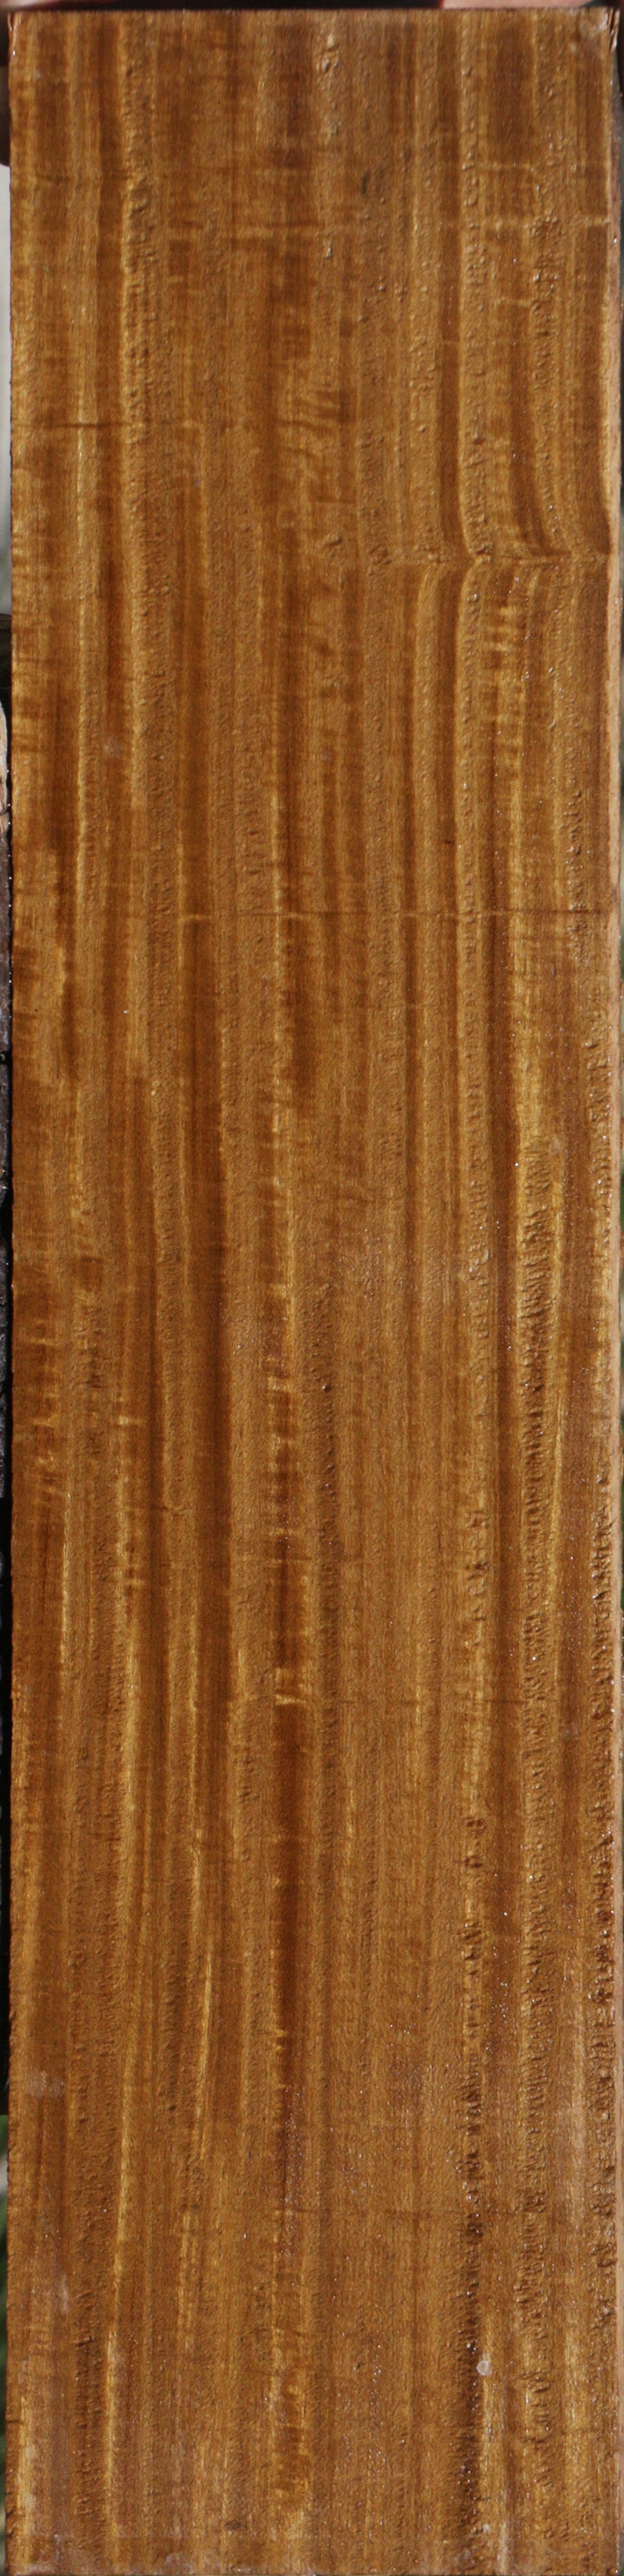 Extra Fancy Afrormosia Lumber